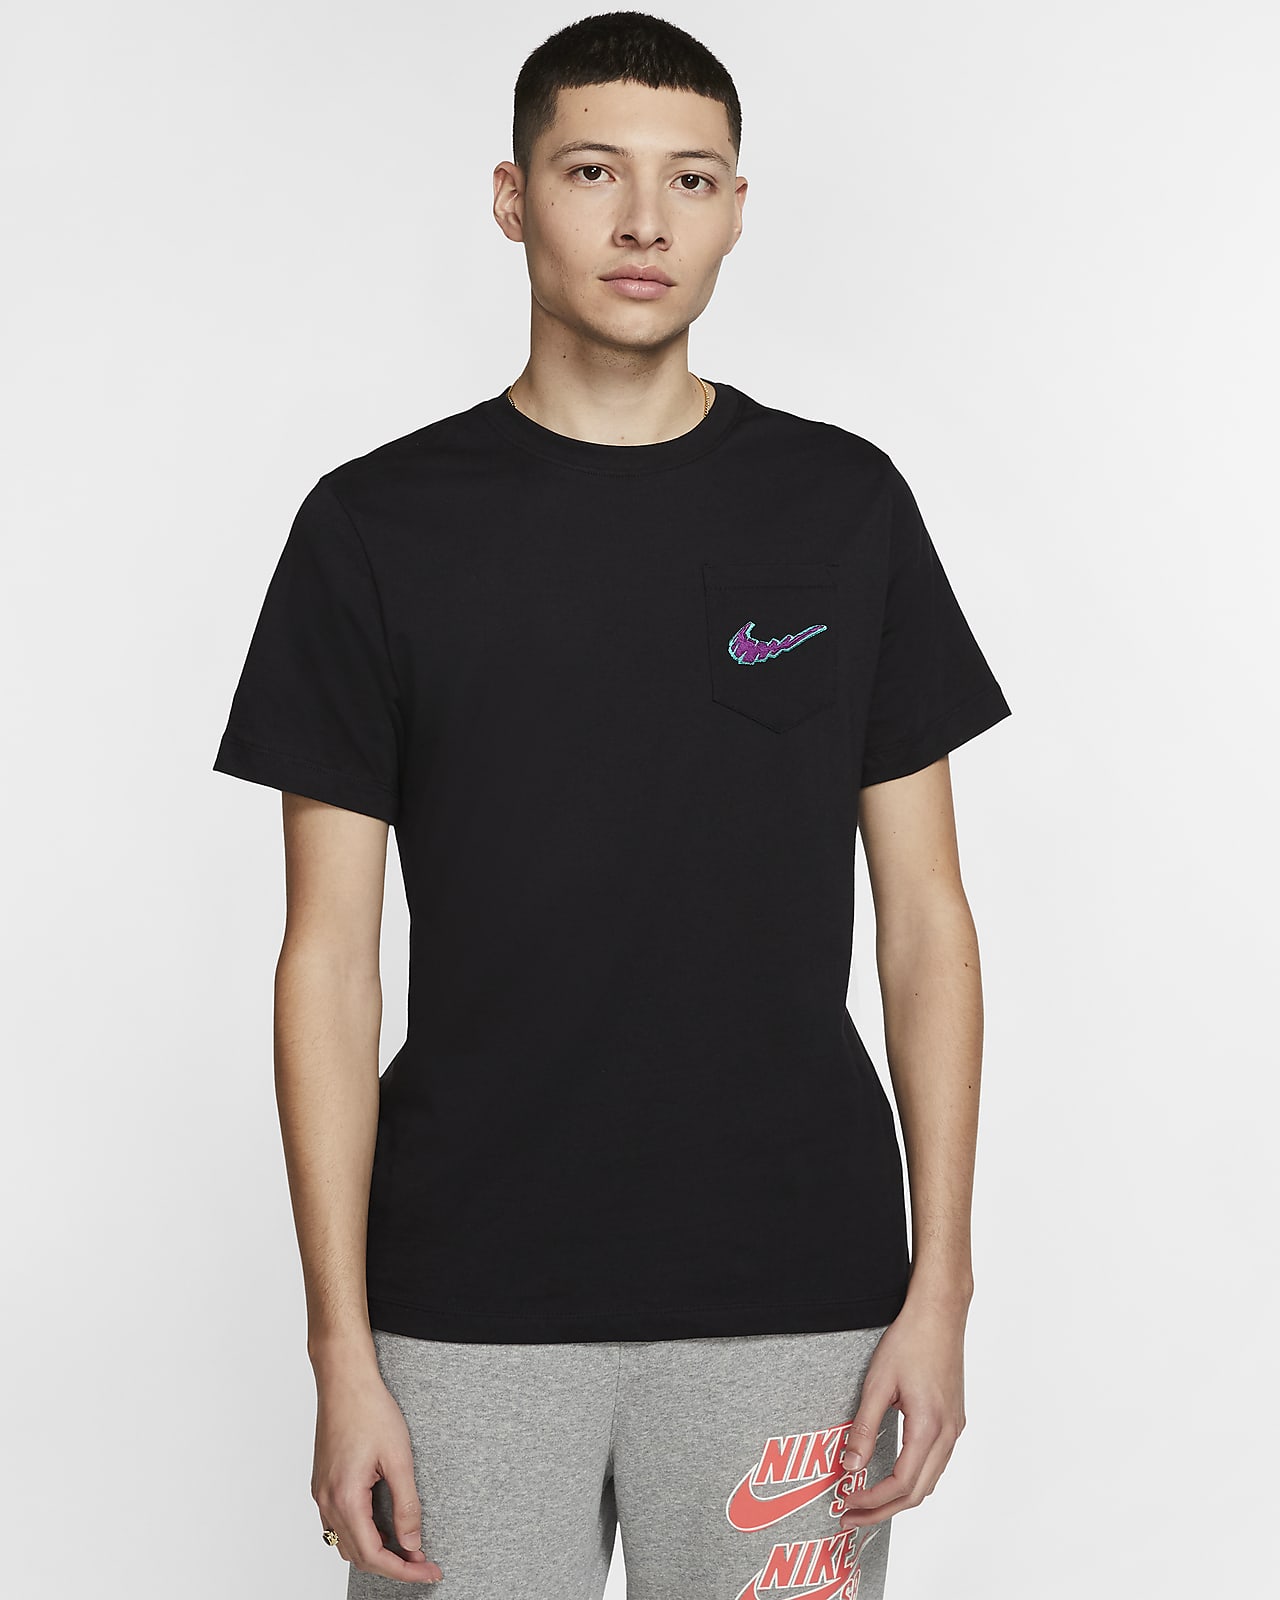 Tee-shirt de skateboard Nike SB pour Homme